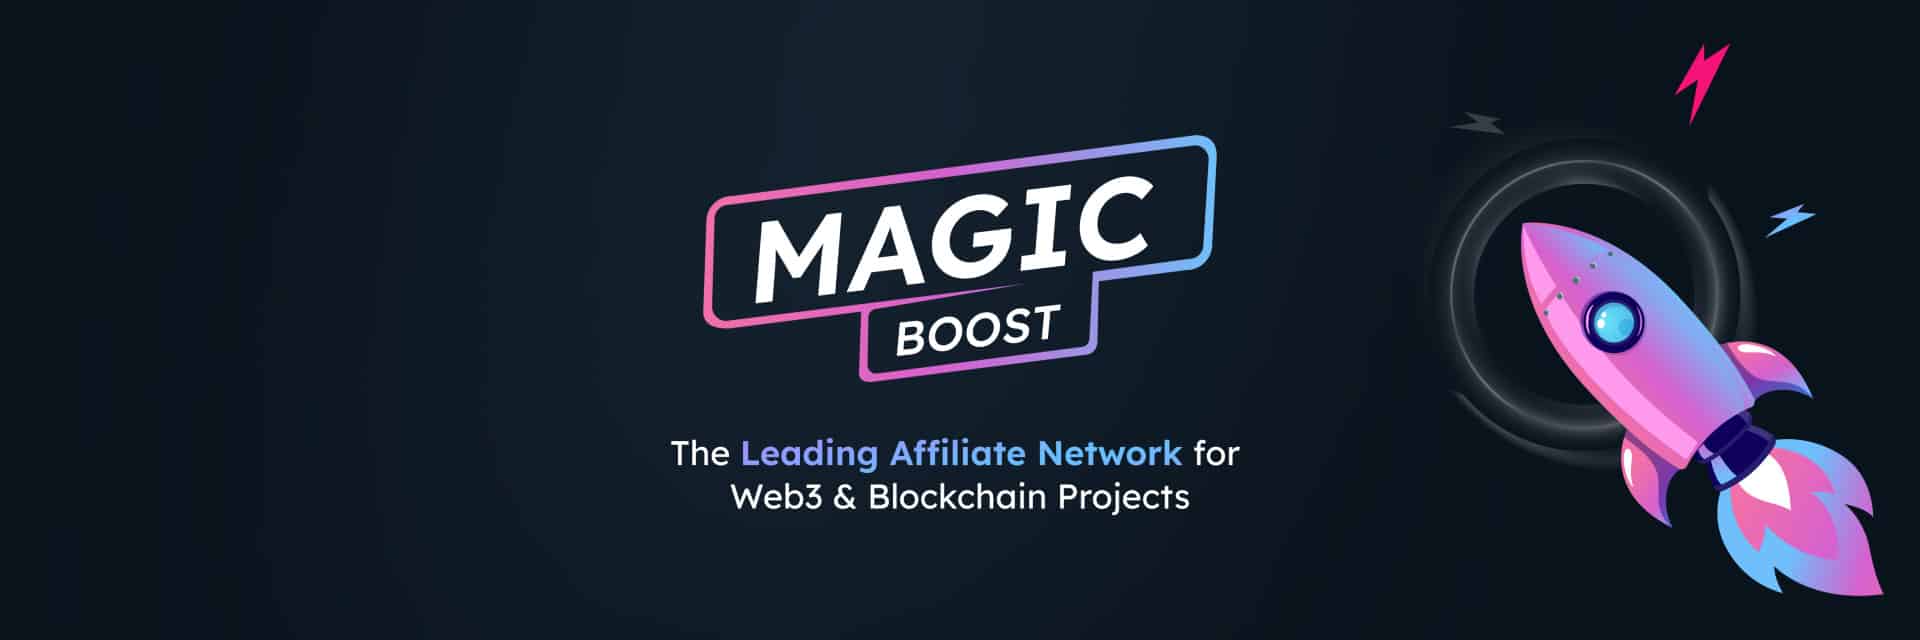 Magic-square-rebrands-its-ultimate-web3-affiliate-network-into-magic-boost